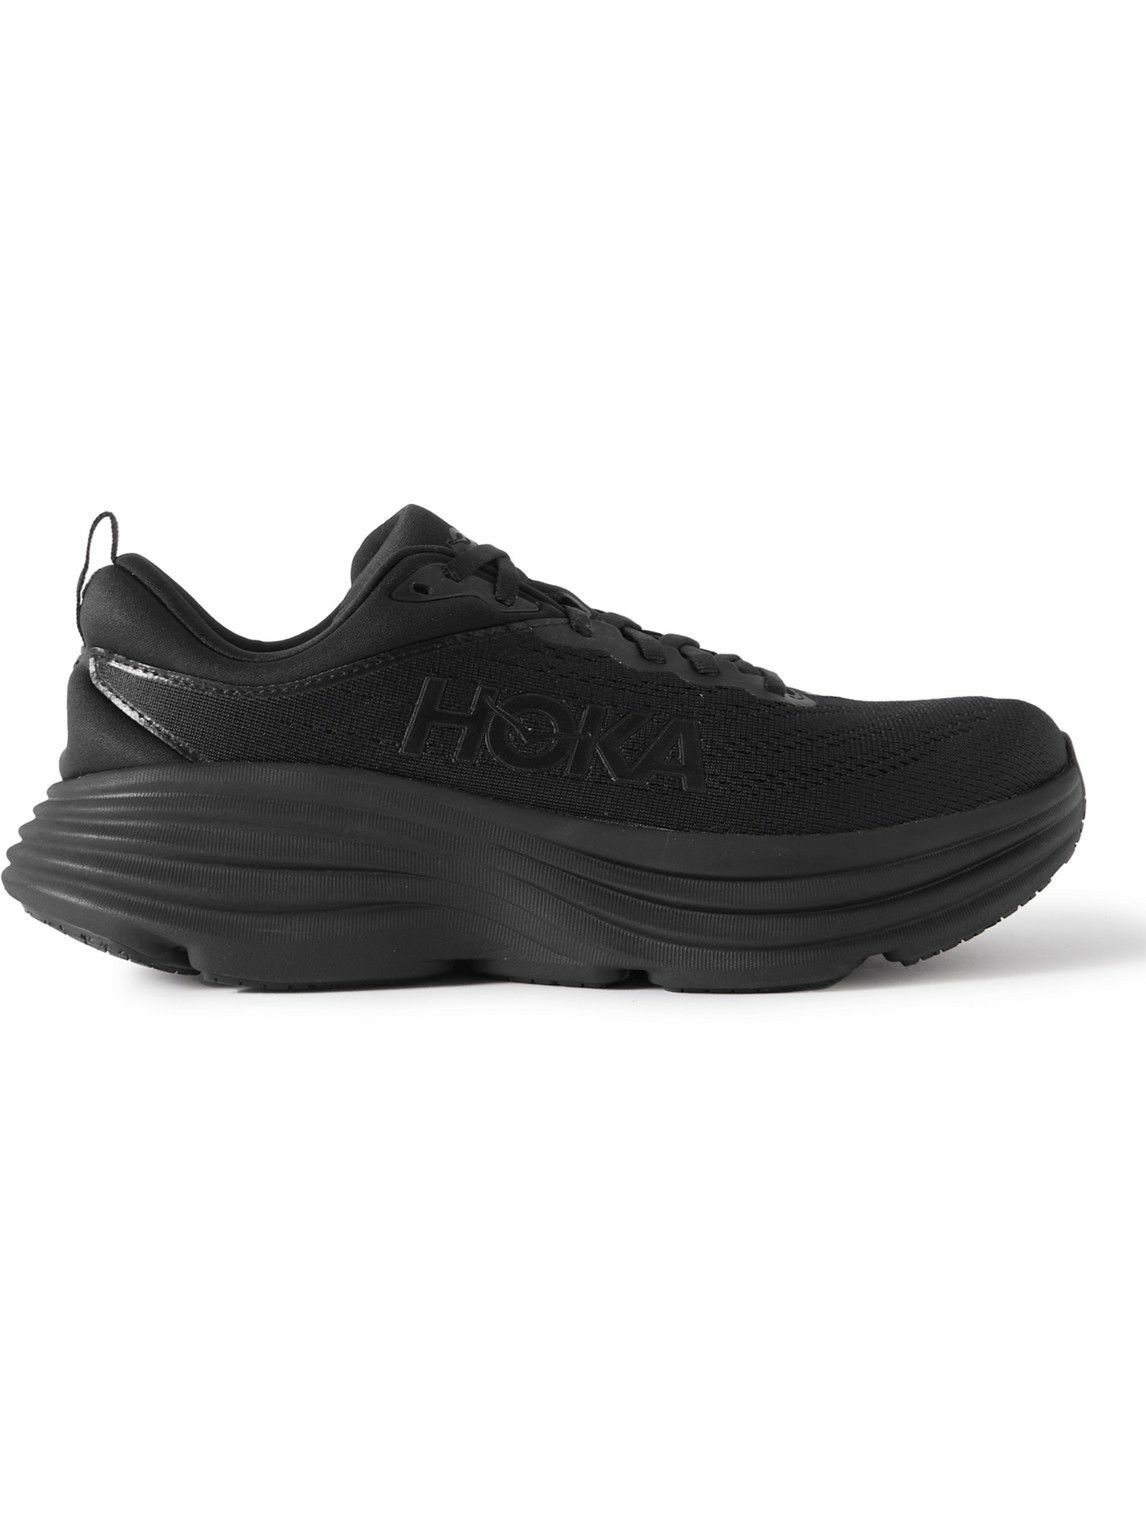 Hoka One One - Bondi 8 Rubber-Trimmed Mesh Running Sneakers - Black ...